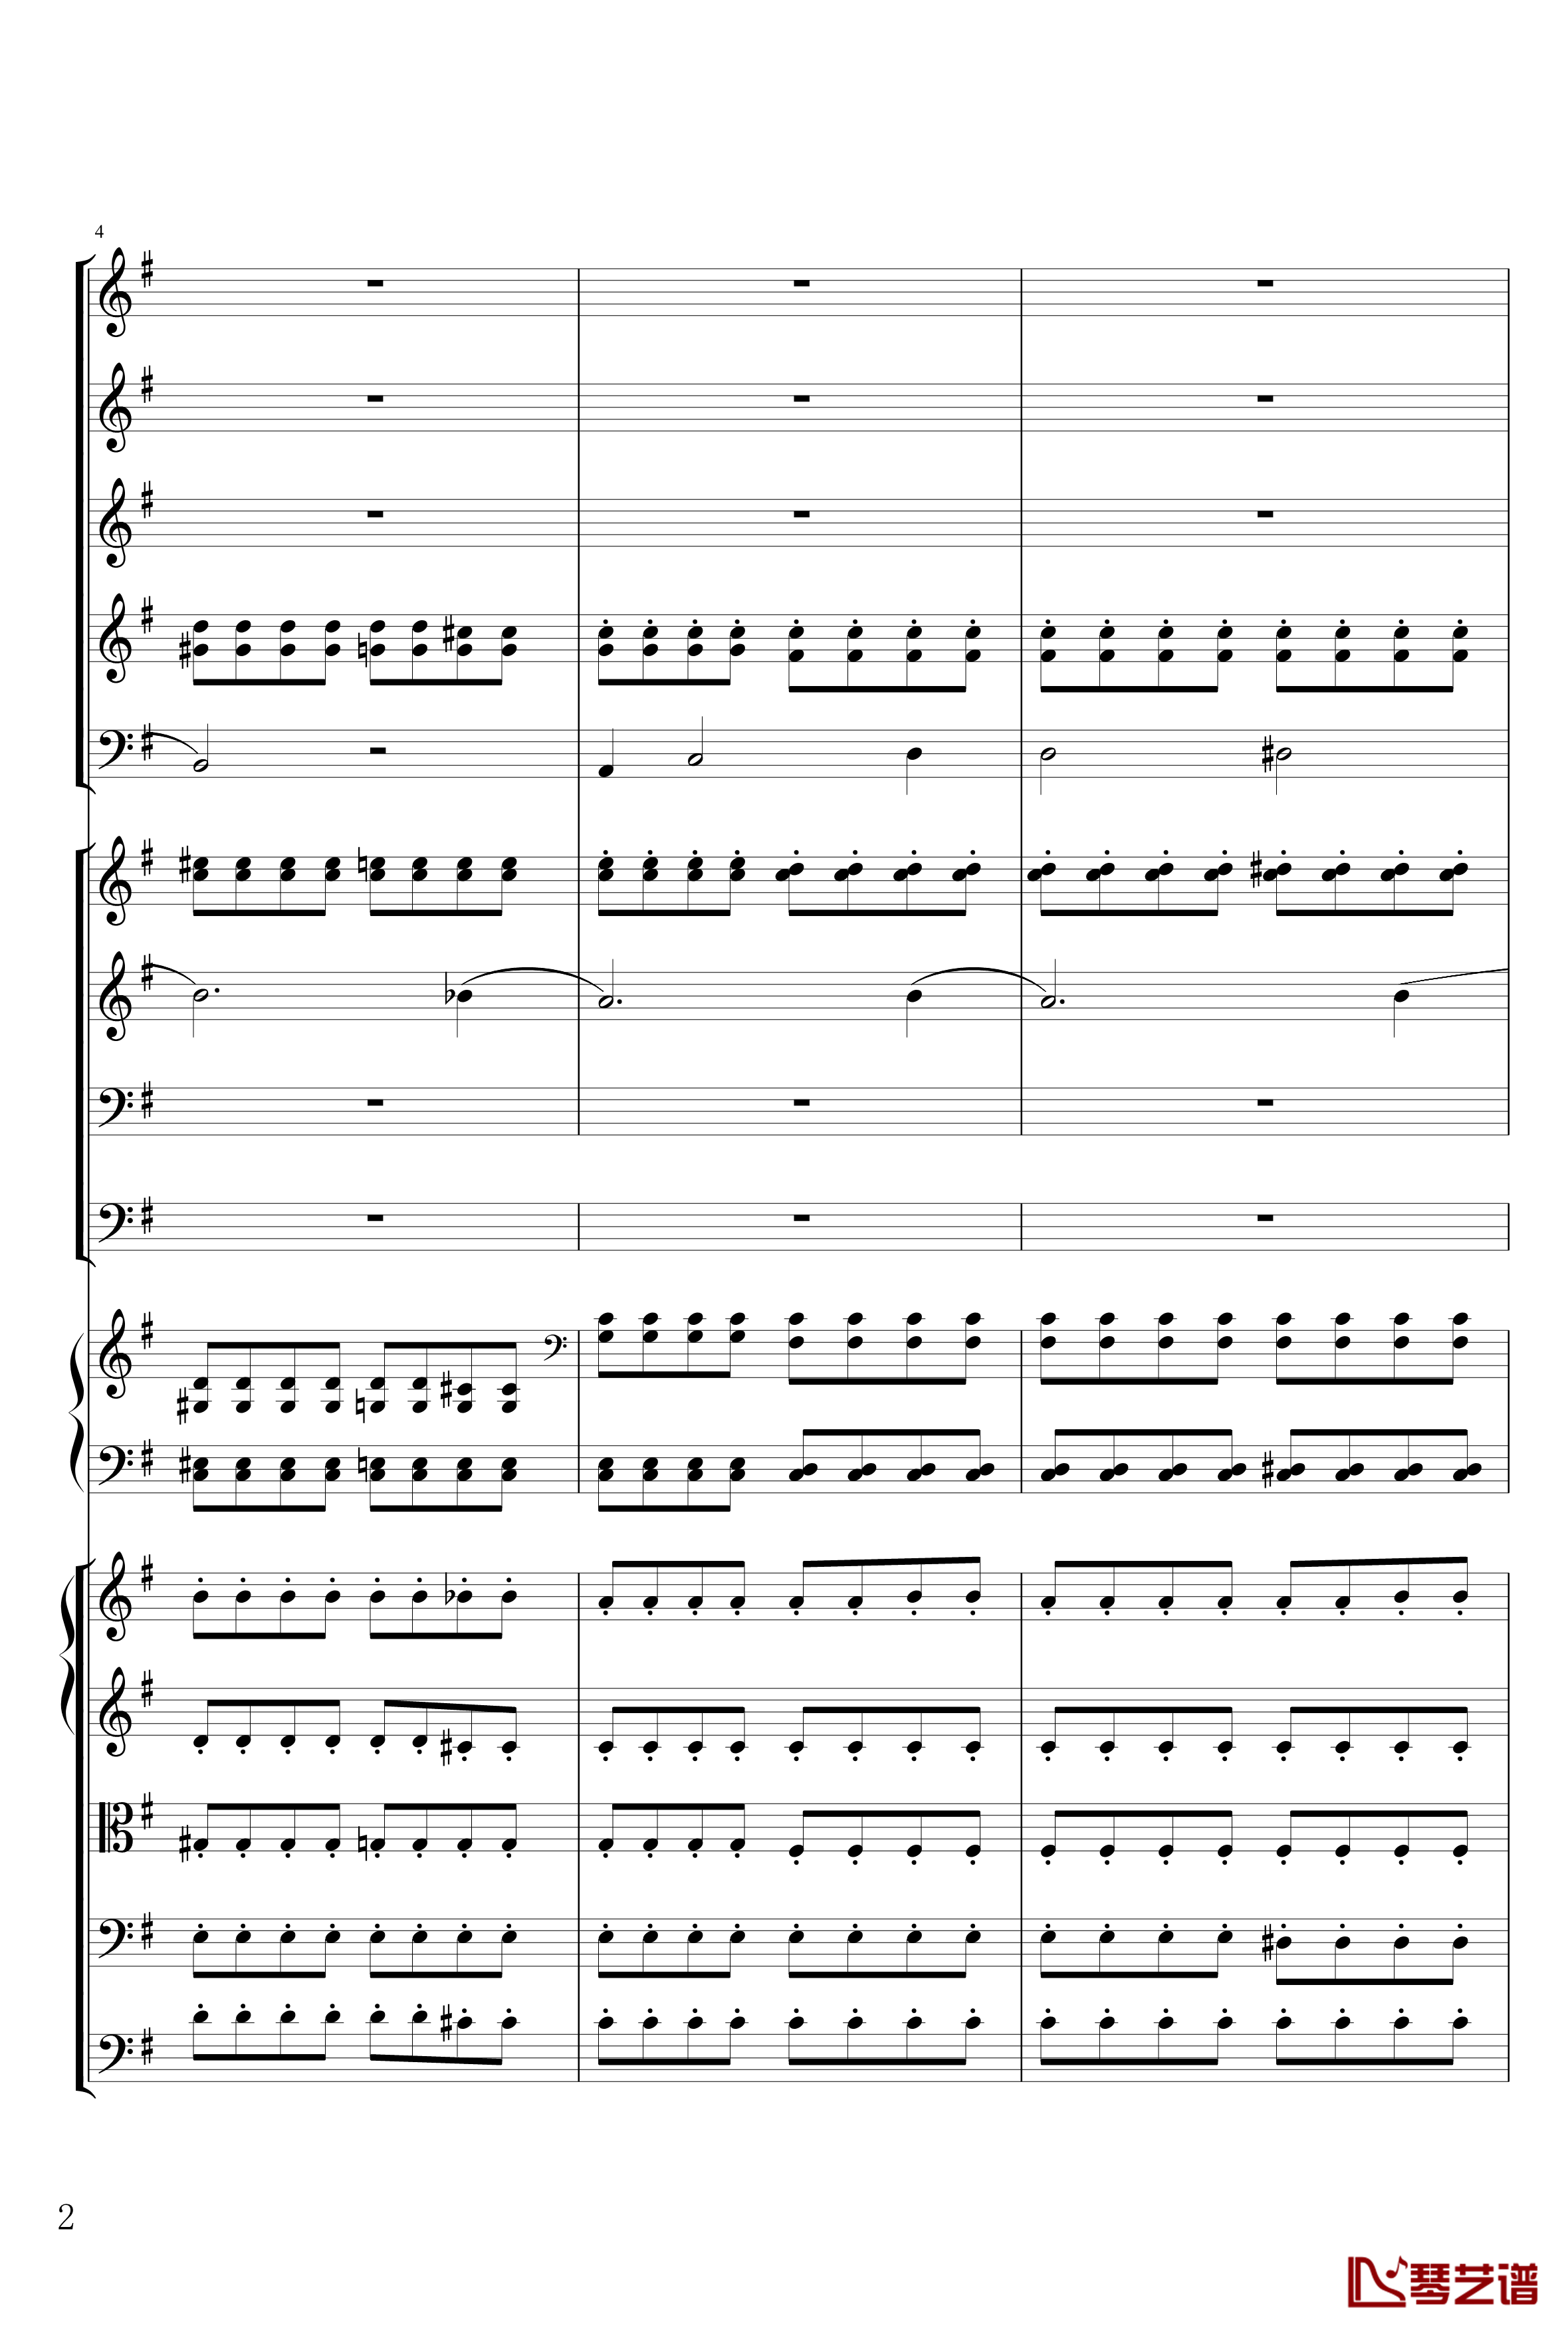 E小调前奏曲钢琴谱-交响乐版-肖邦-chopin2